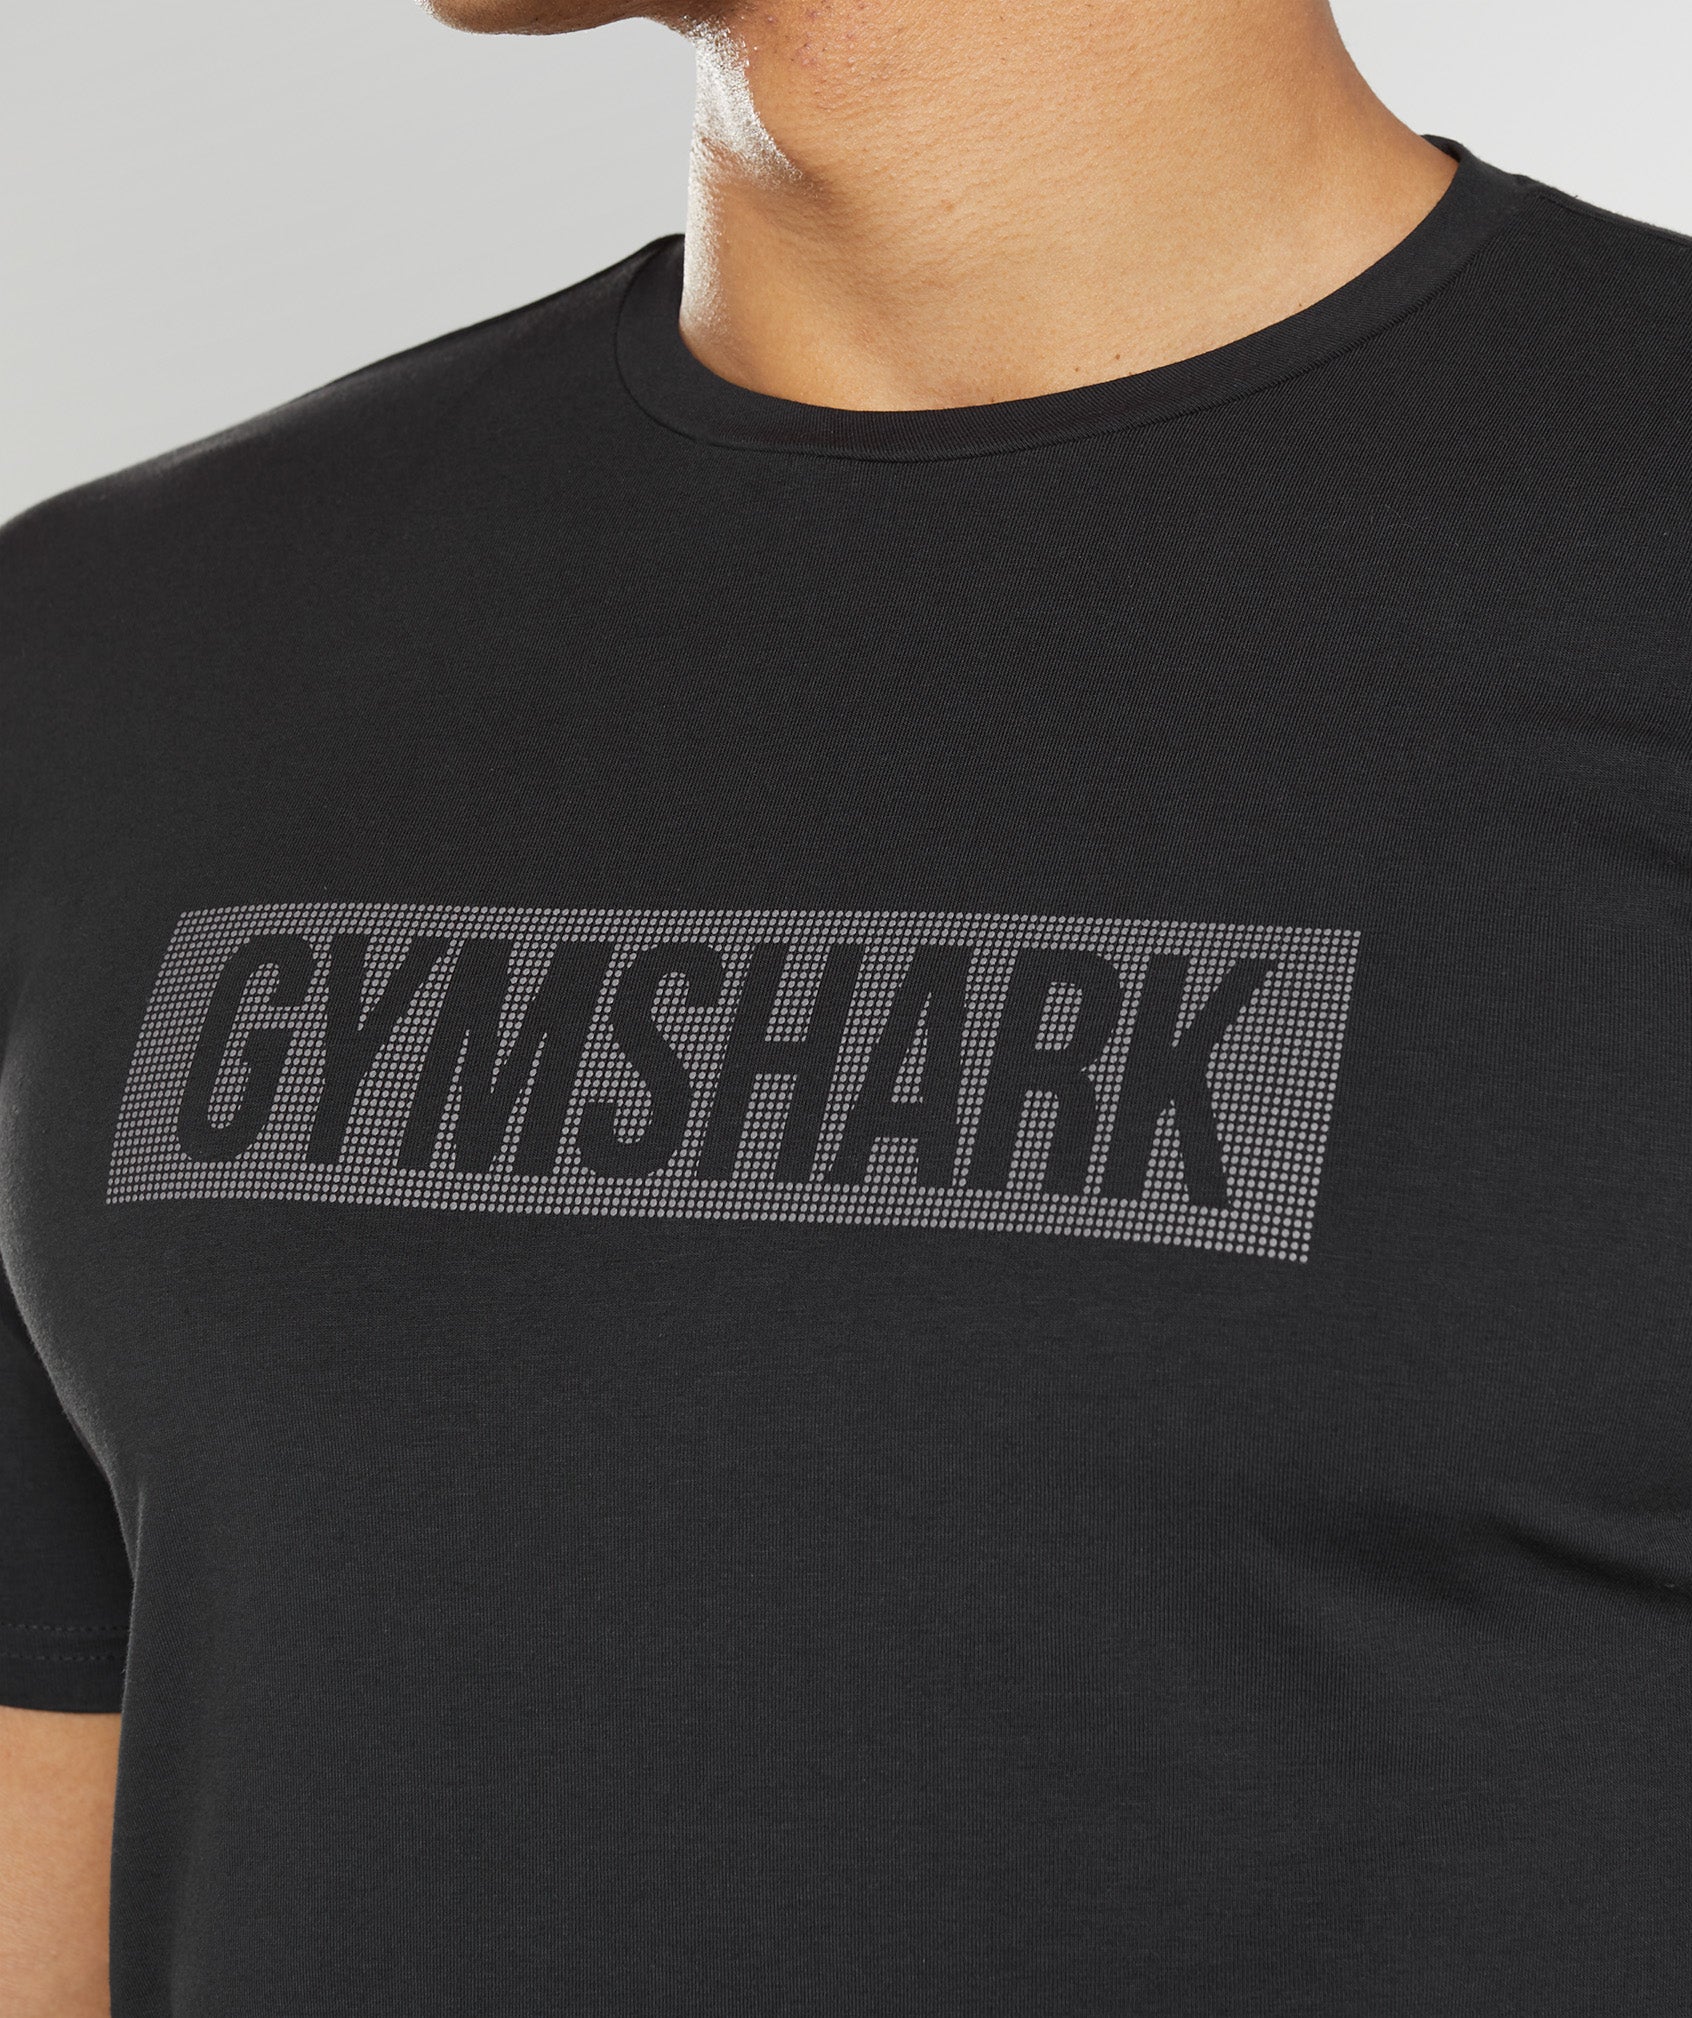 Gymshark Block T-shirts Herren Schwarz | 0716438-ZO